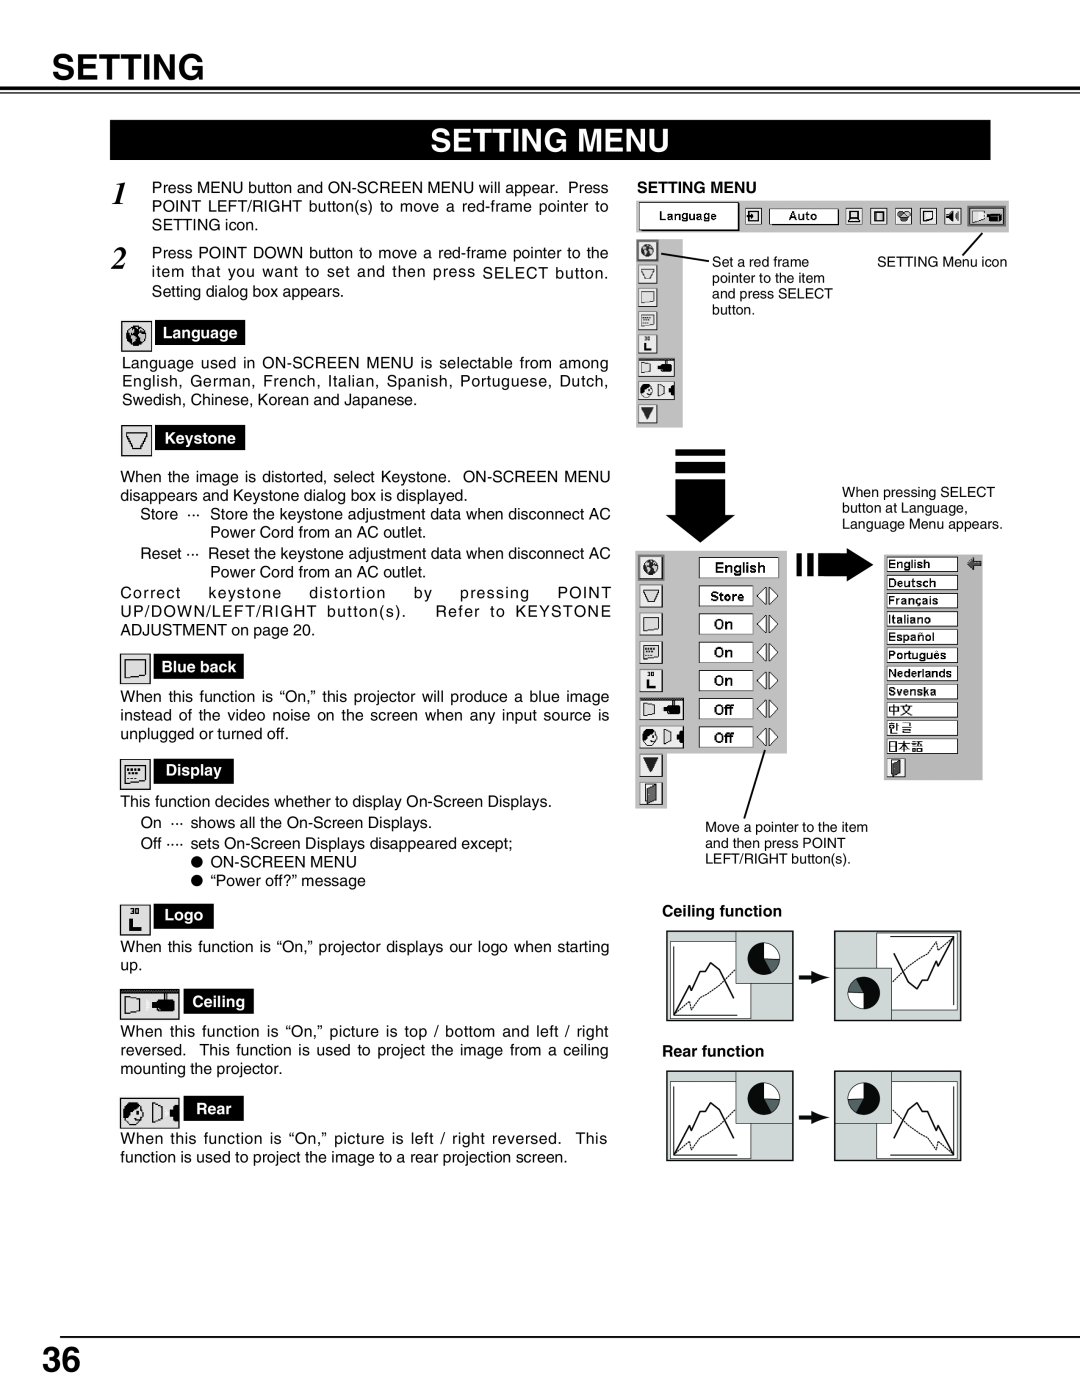 Christie Digital Systems 38-VIV207-01 user manual Setting Menu, Ceiling function Rear function 